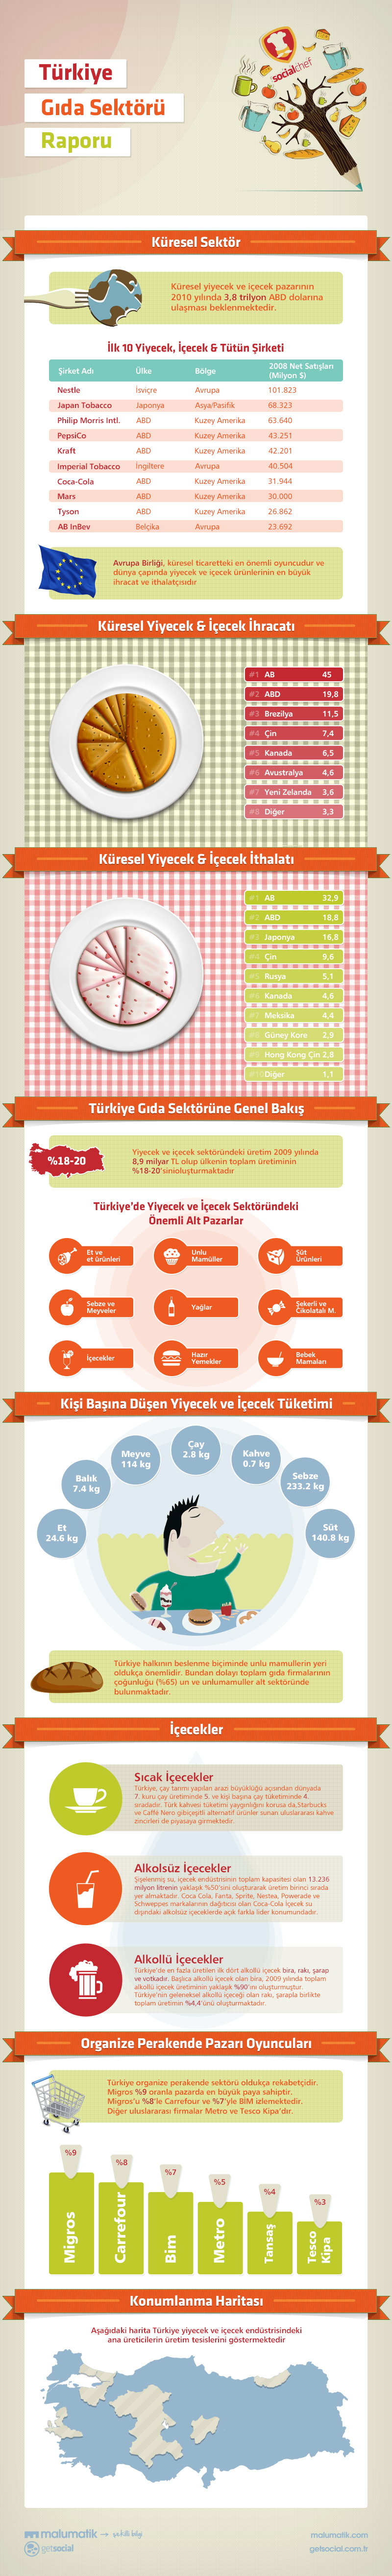 Infographic - Turkish Food Industry Report